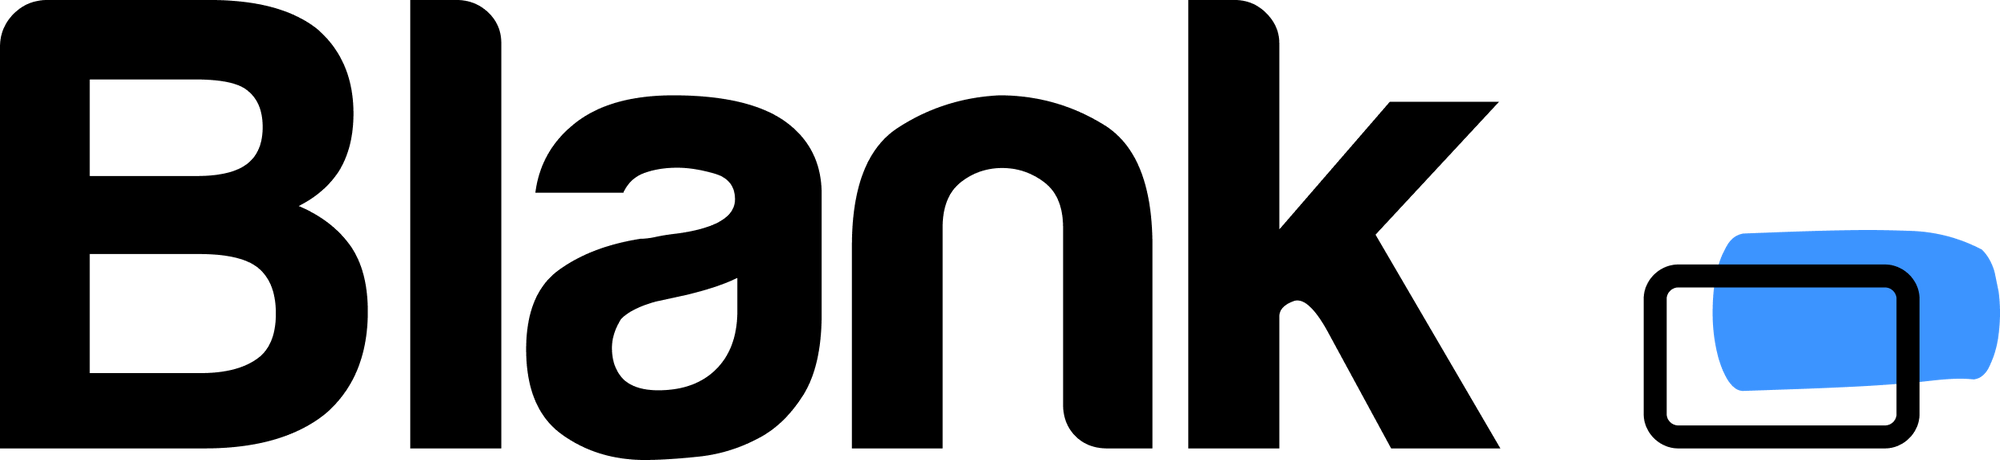 Logo_noir.png